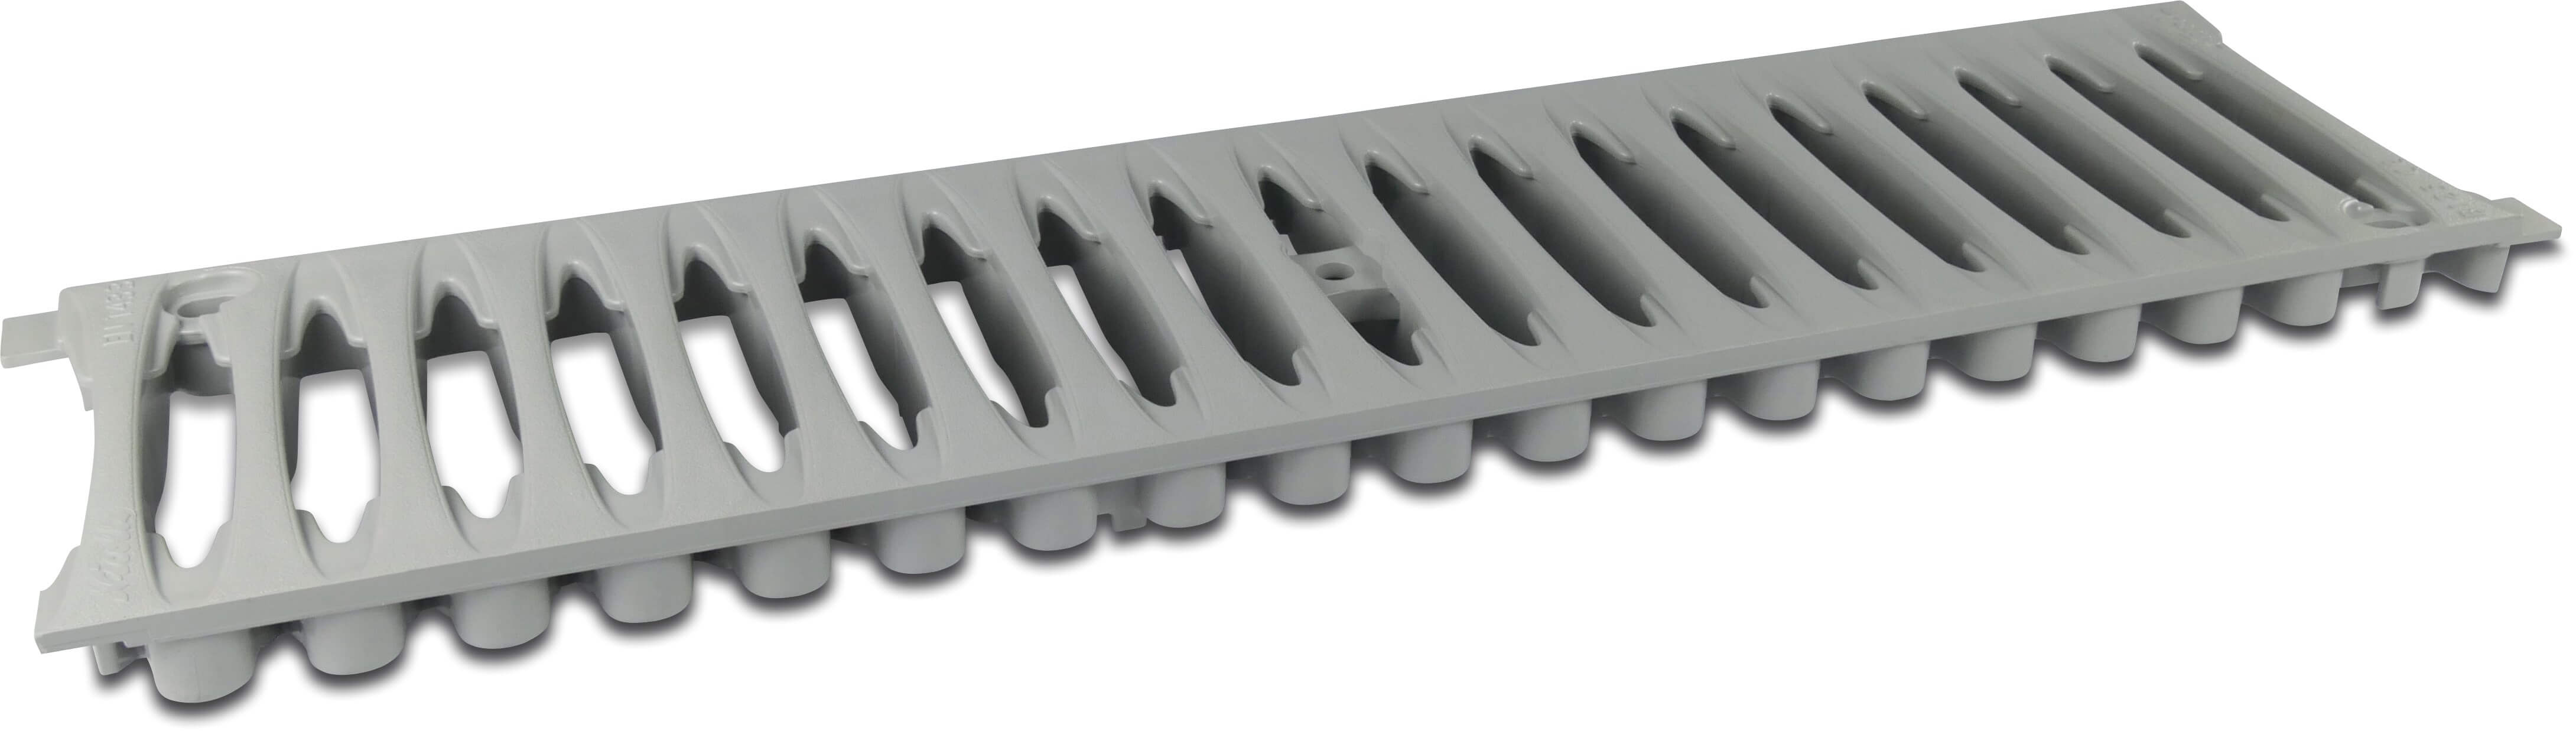 Floor channel grid PVC-U grey type with slits